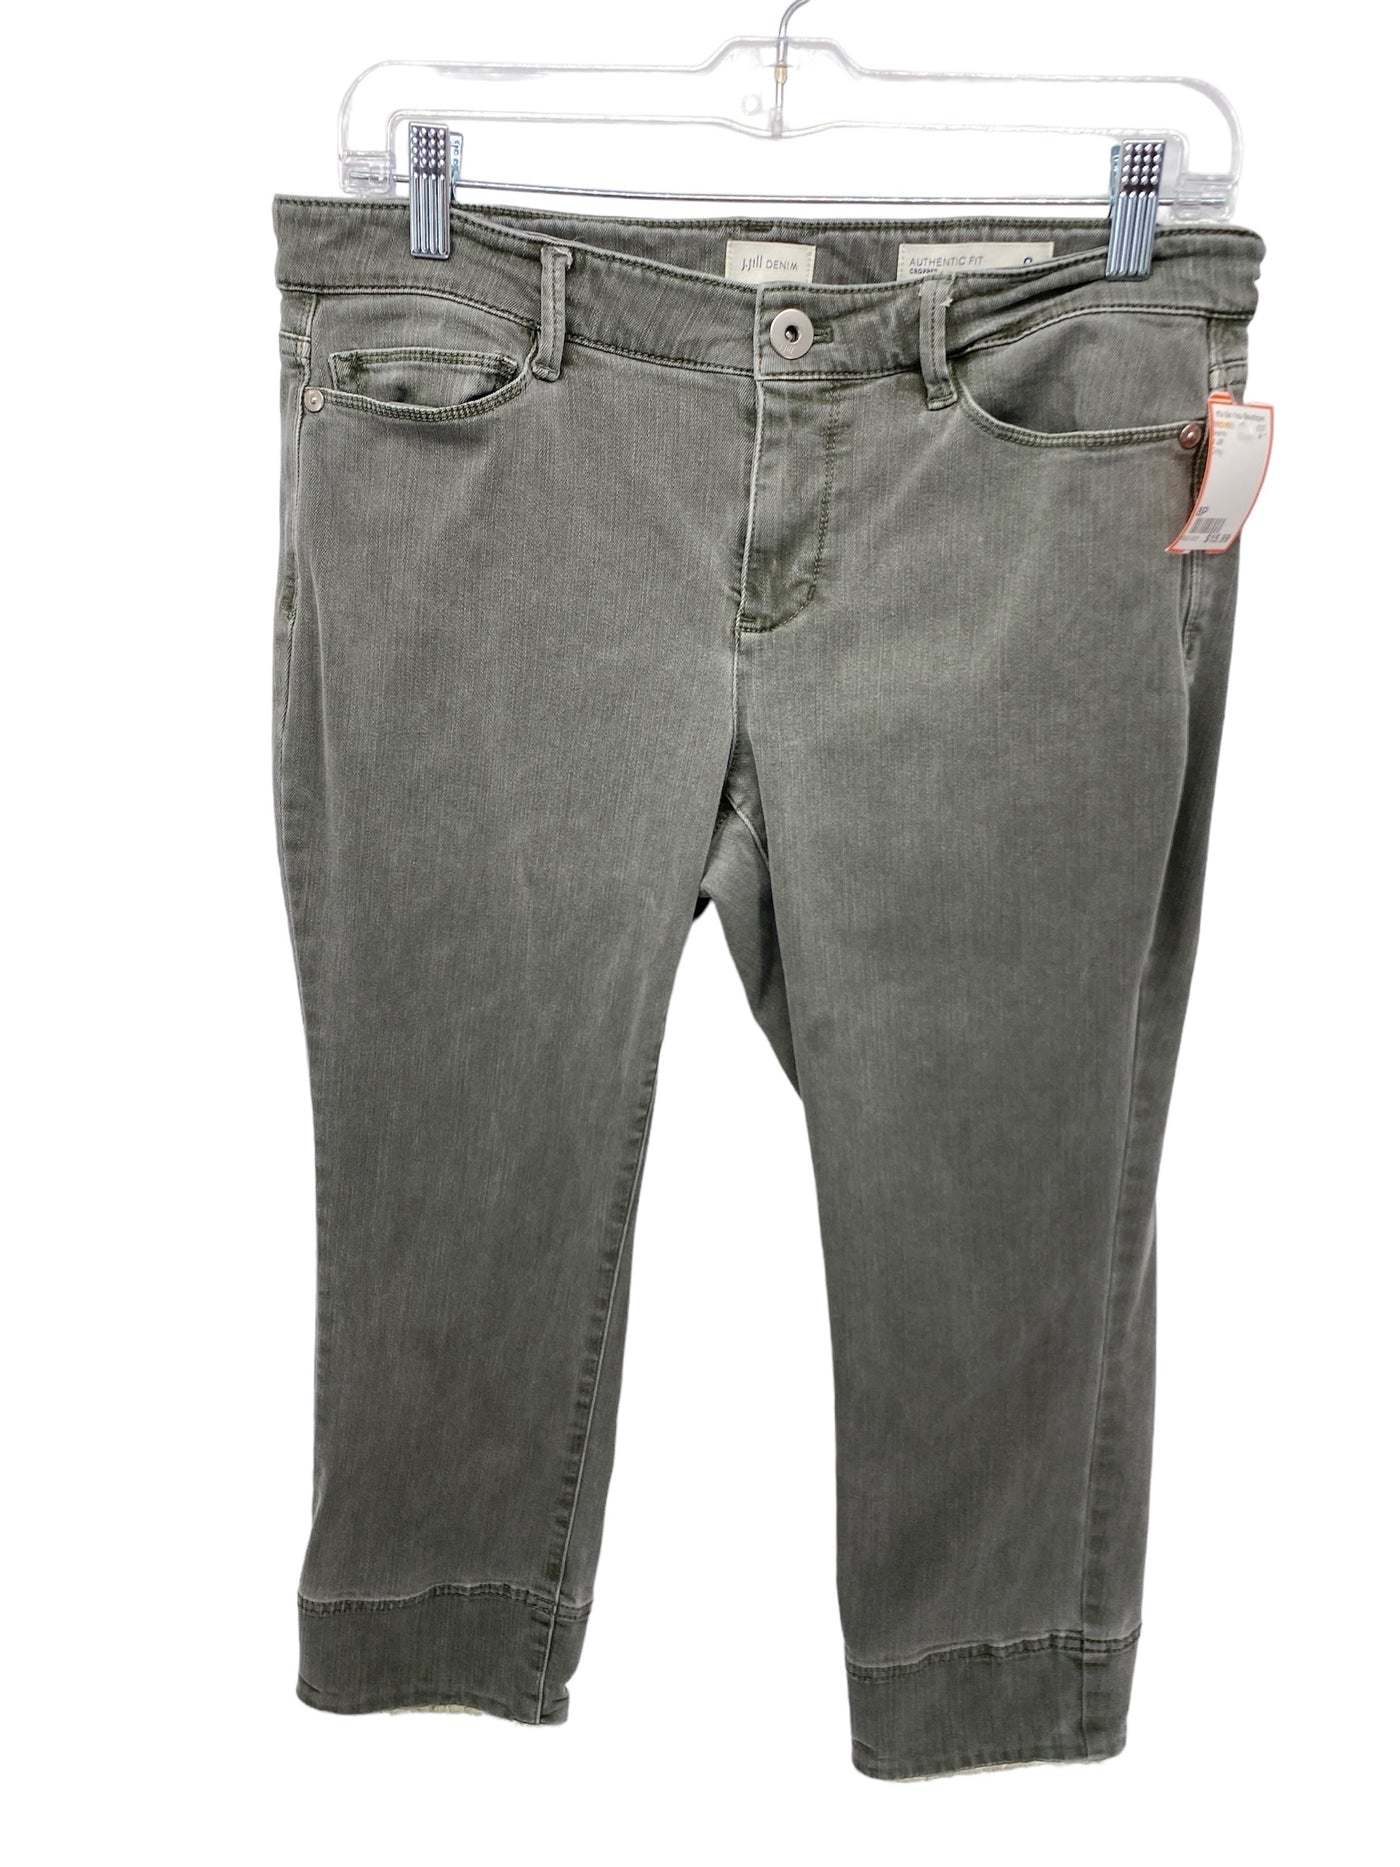 J Jill Misses Size 8P Grey Jeans